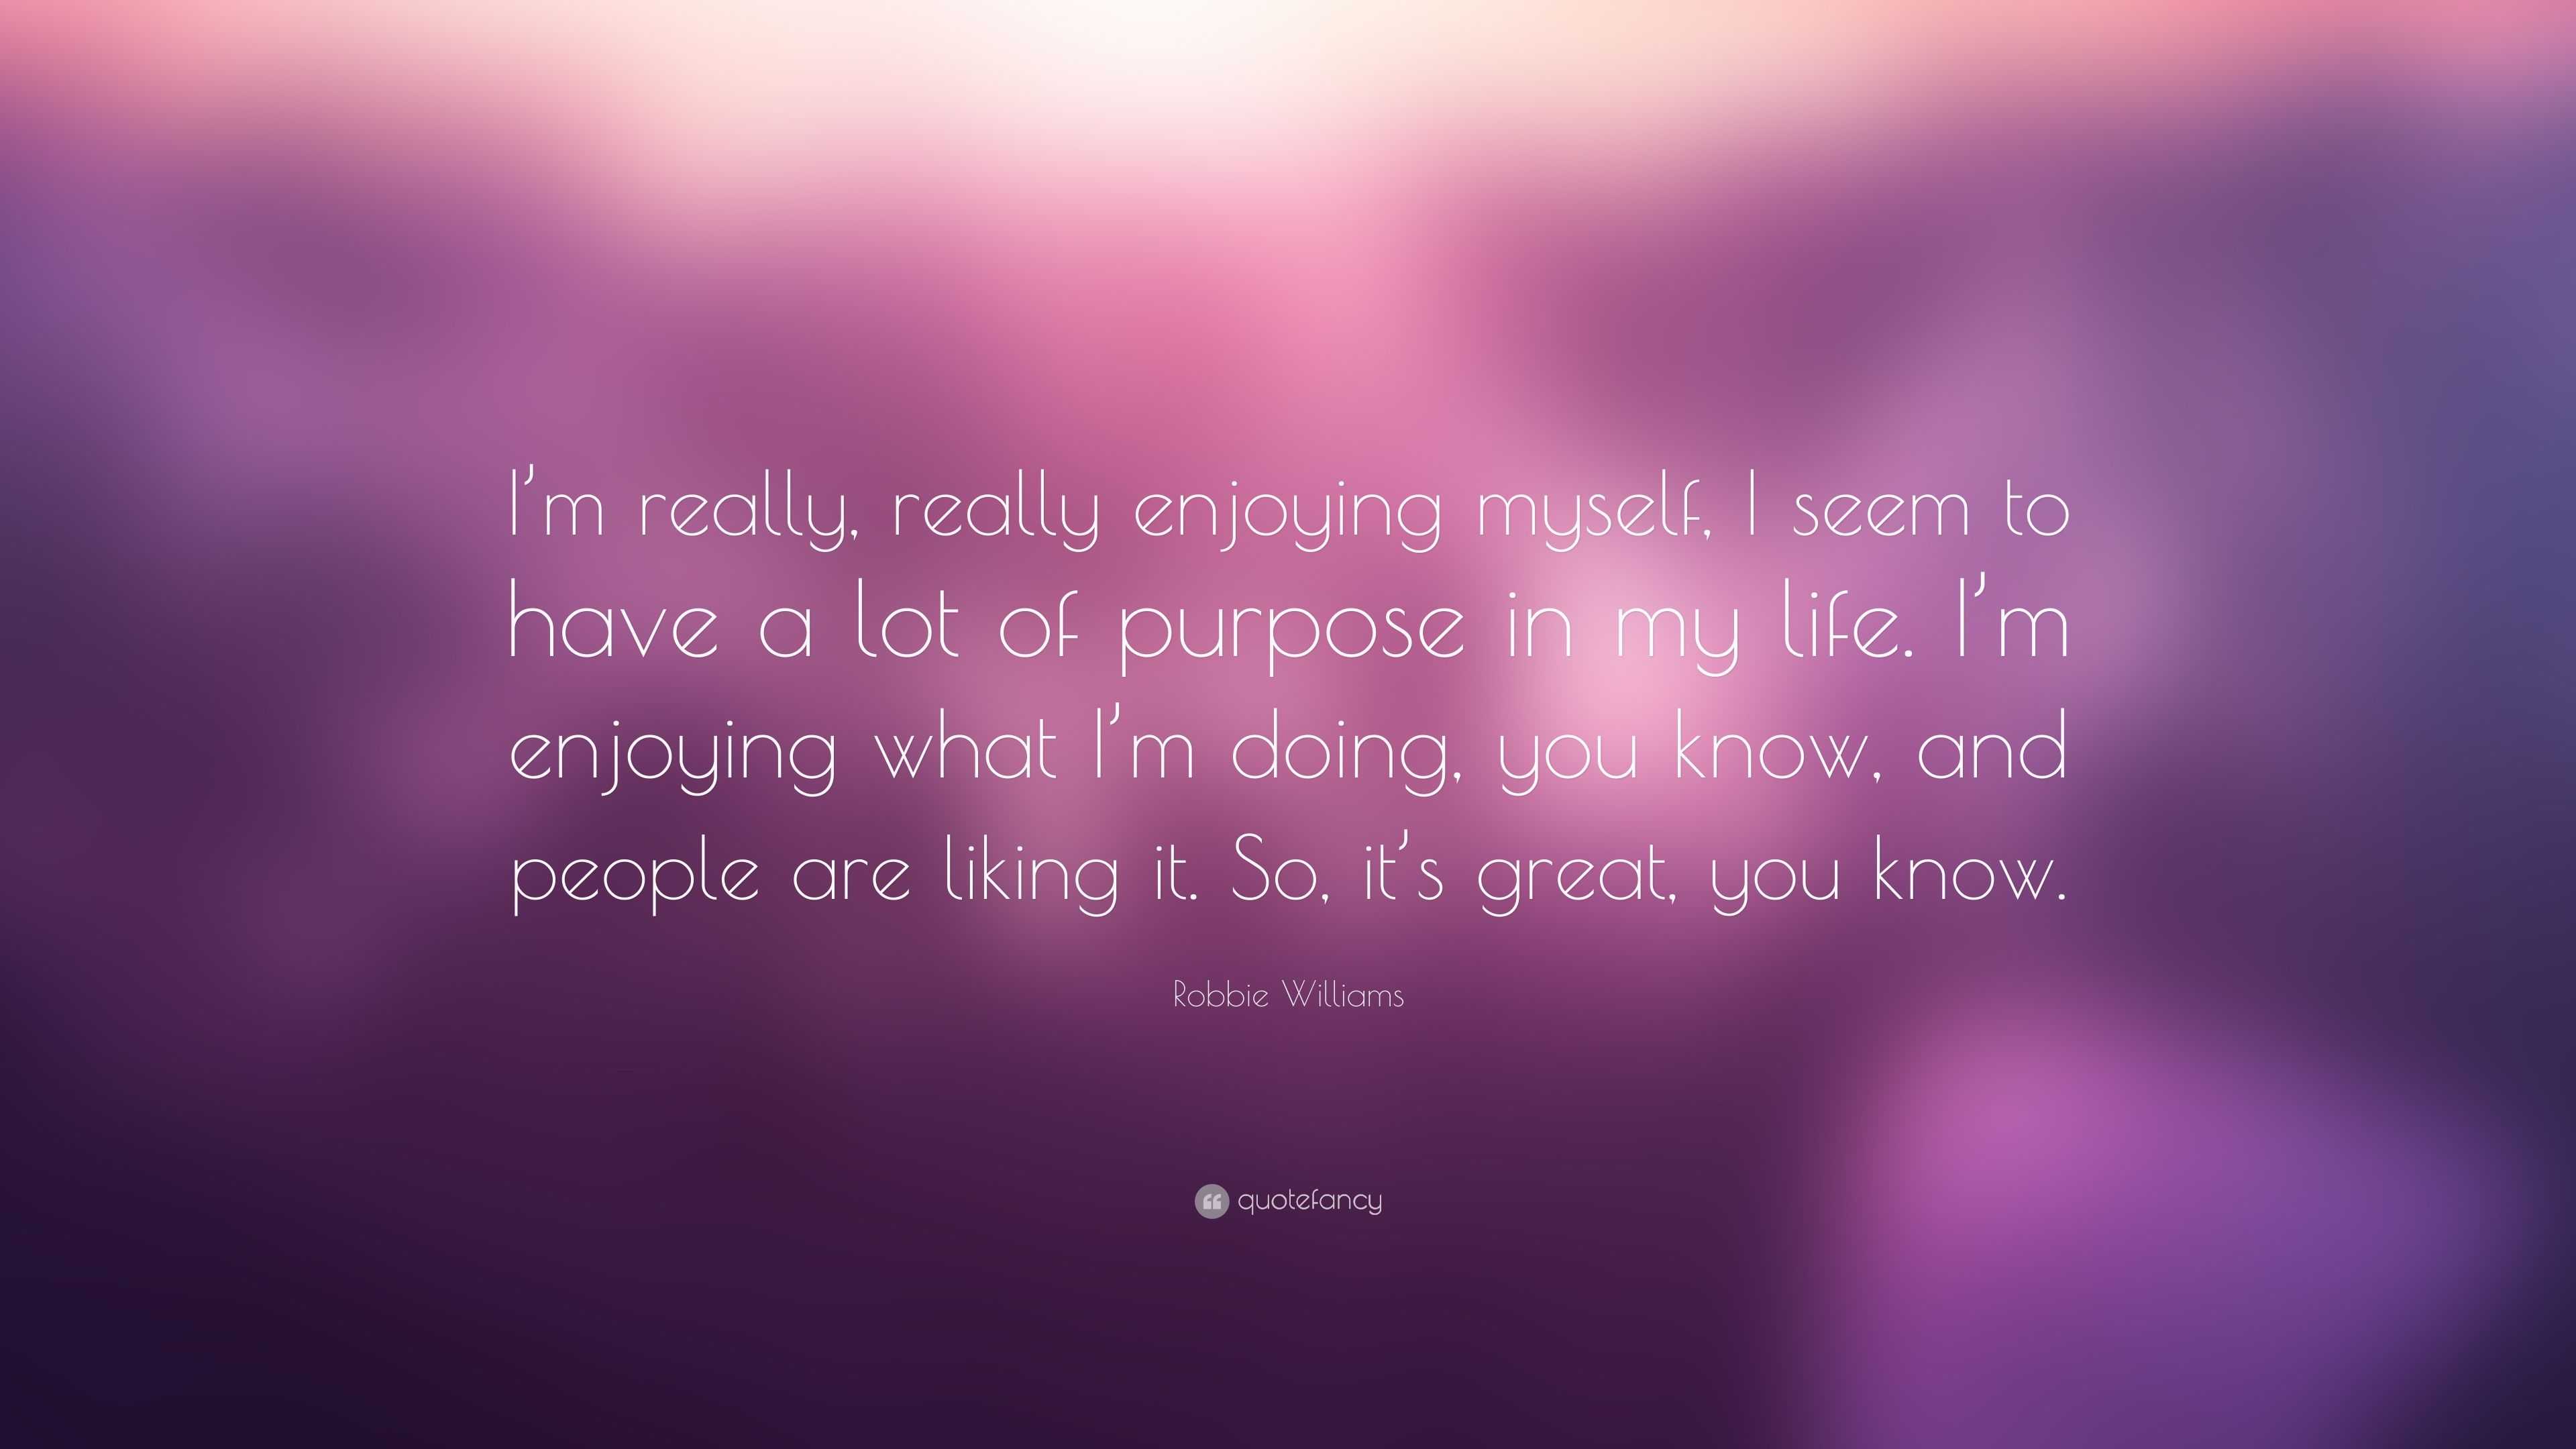 Robbie Williams quote: I'm really, really enjoying myself, I seem